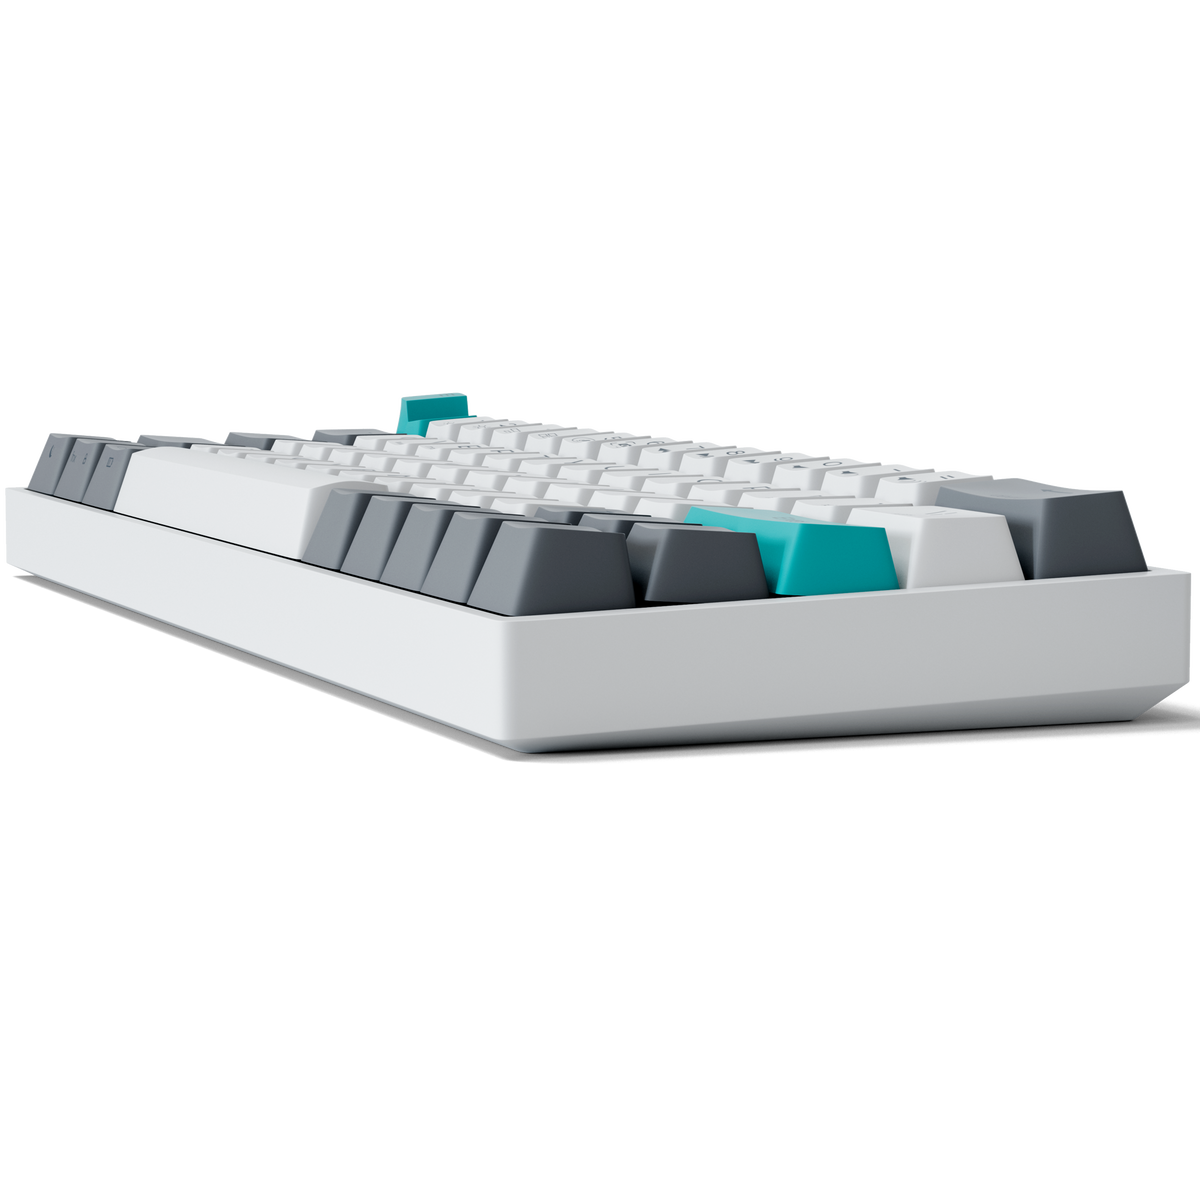 White 60 Mechanical Keyboard PBT Keycaps